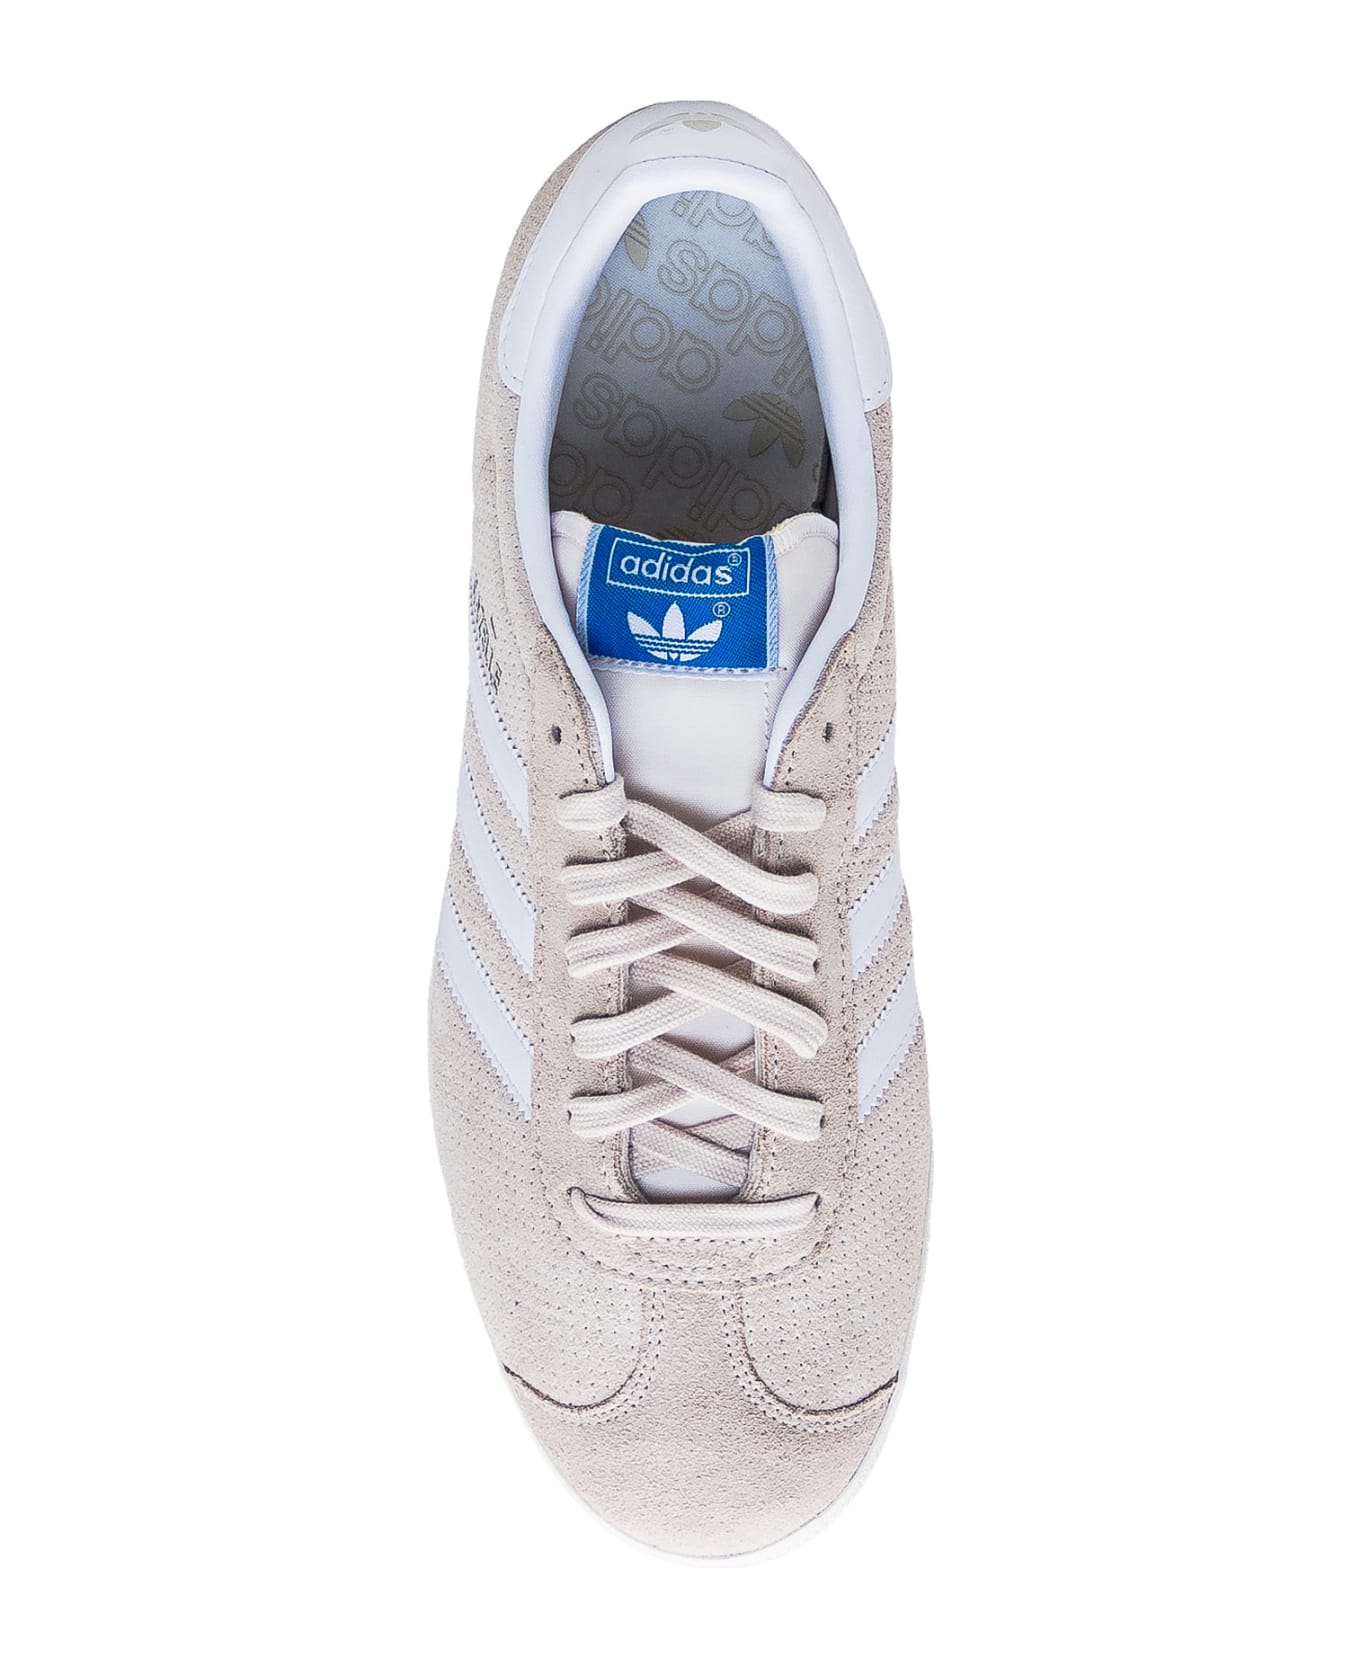 Adidas Originals Gazelle Sneaker - WONWHI/FTWWHT/CWHITE